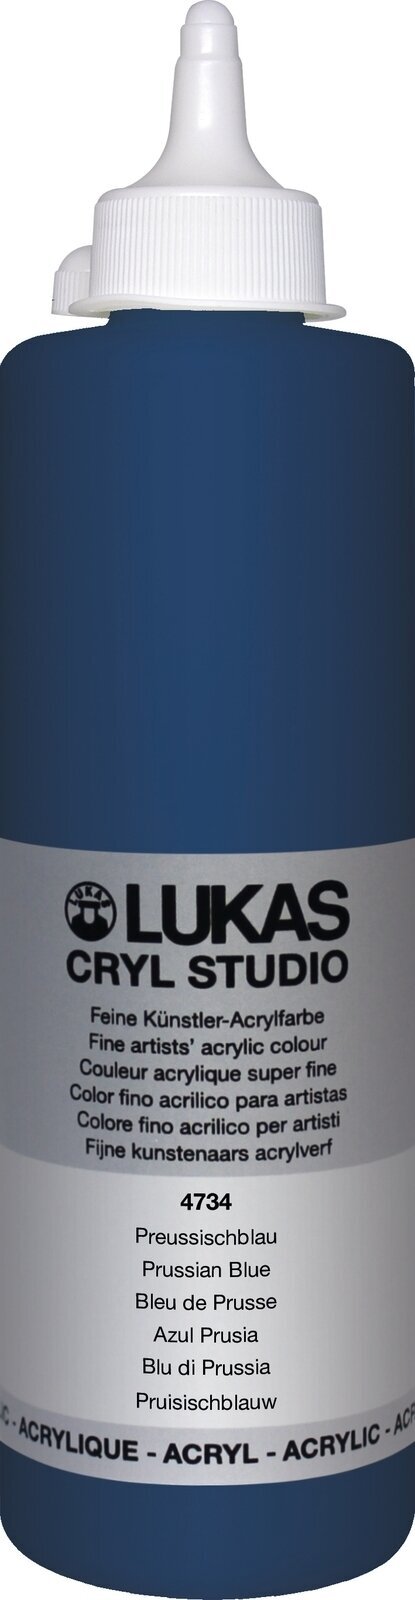 Acrylic Paint Lukas Cryl Studio Acrylic Paint Plastic Bottle Acrylic Paint Prussian Blue 500 ml 1 pc